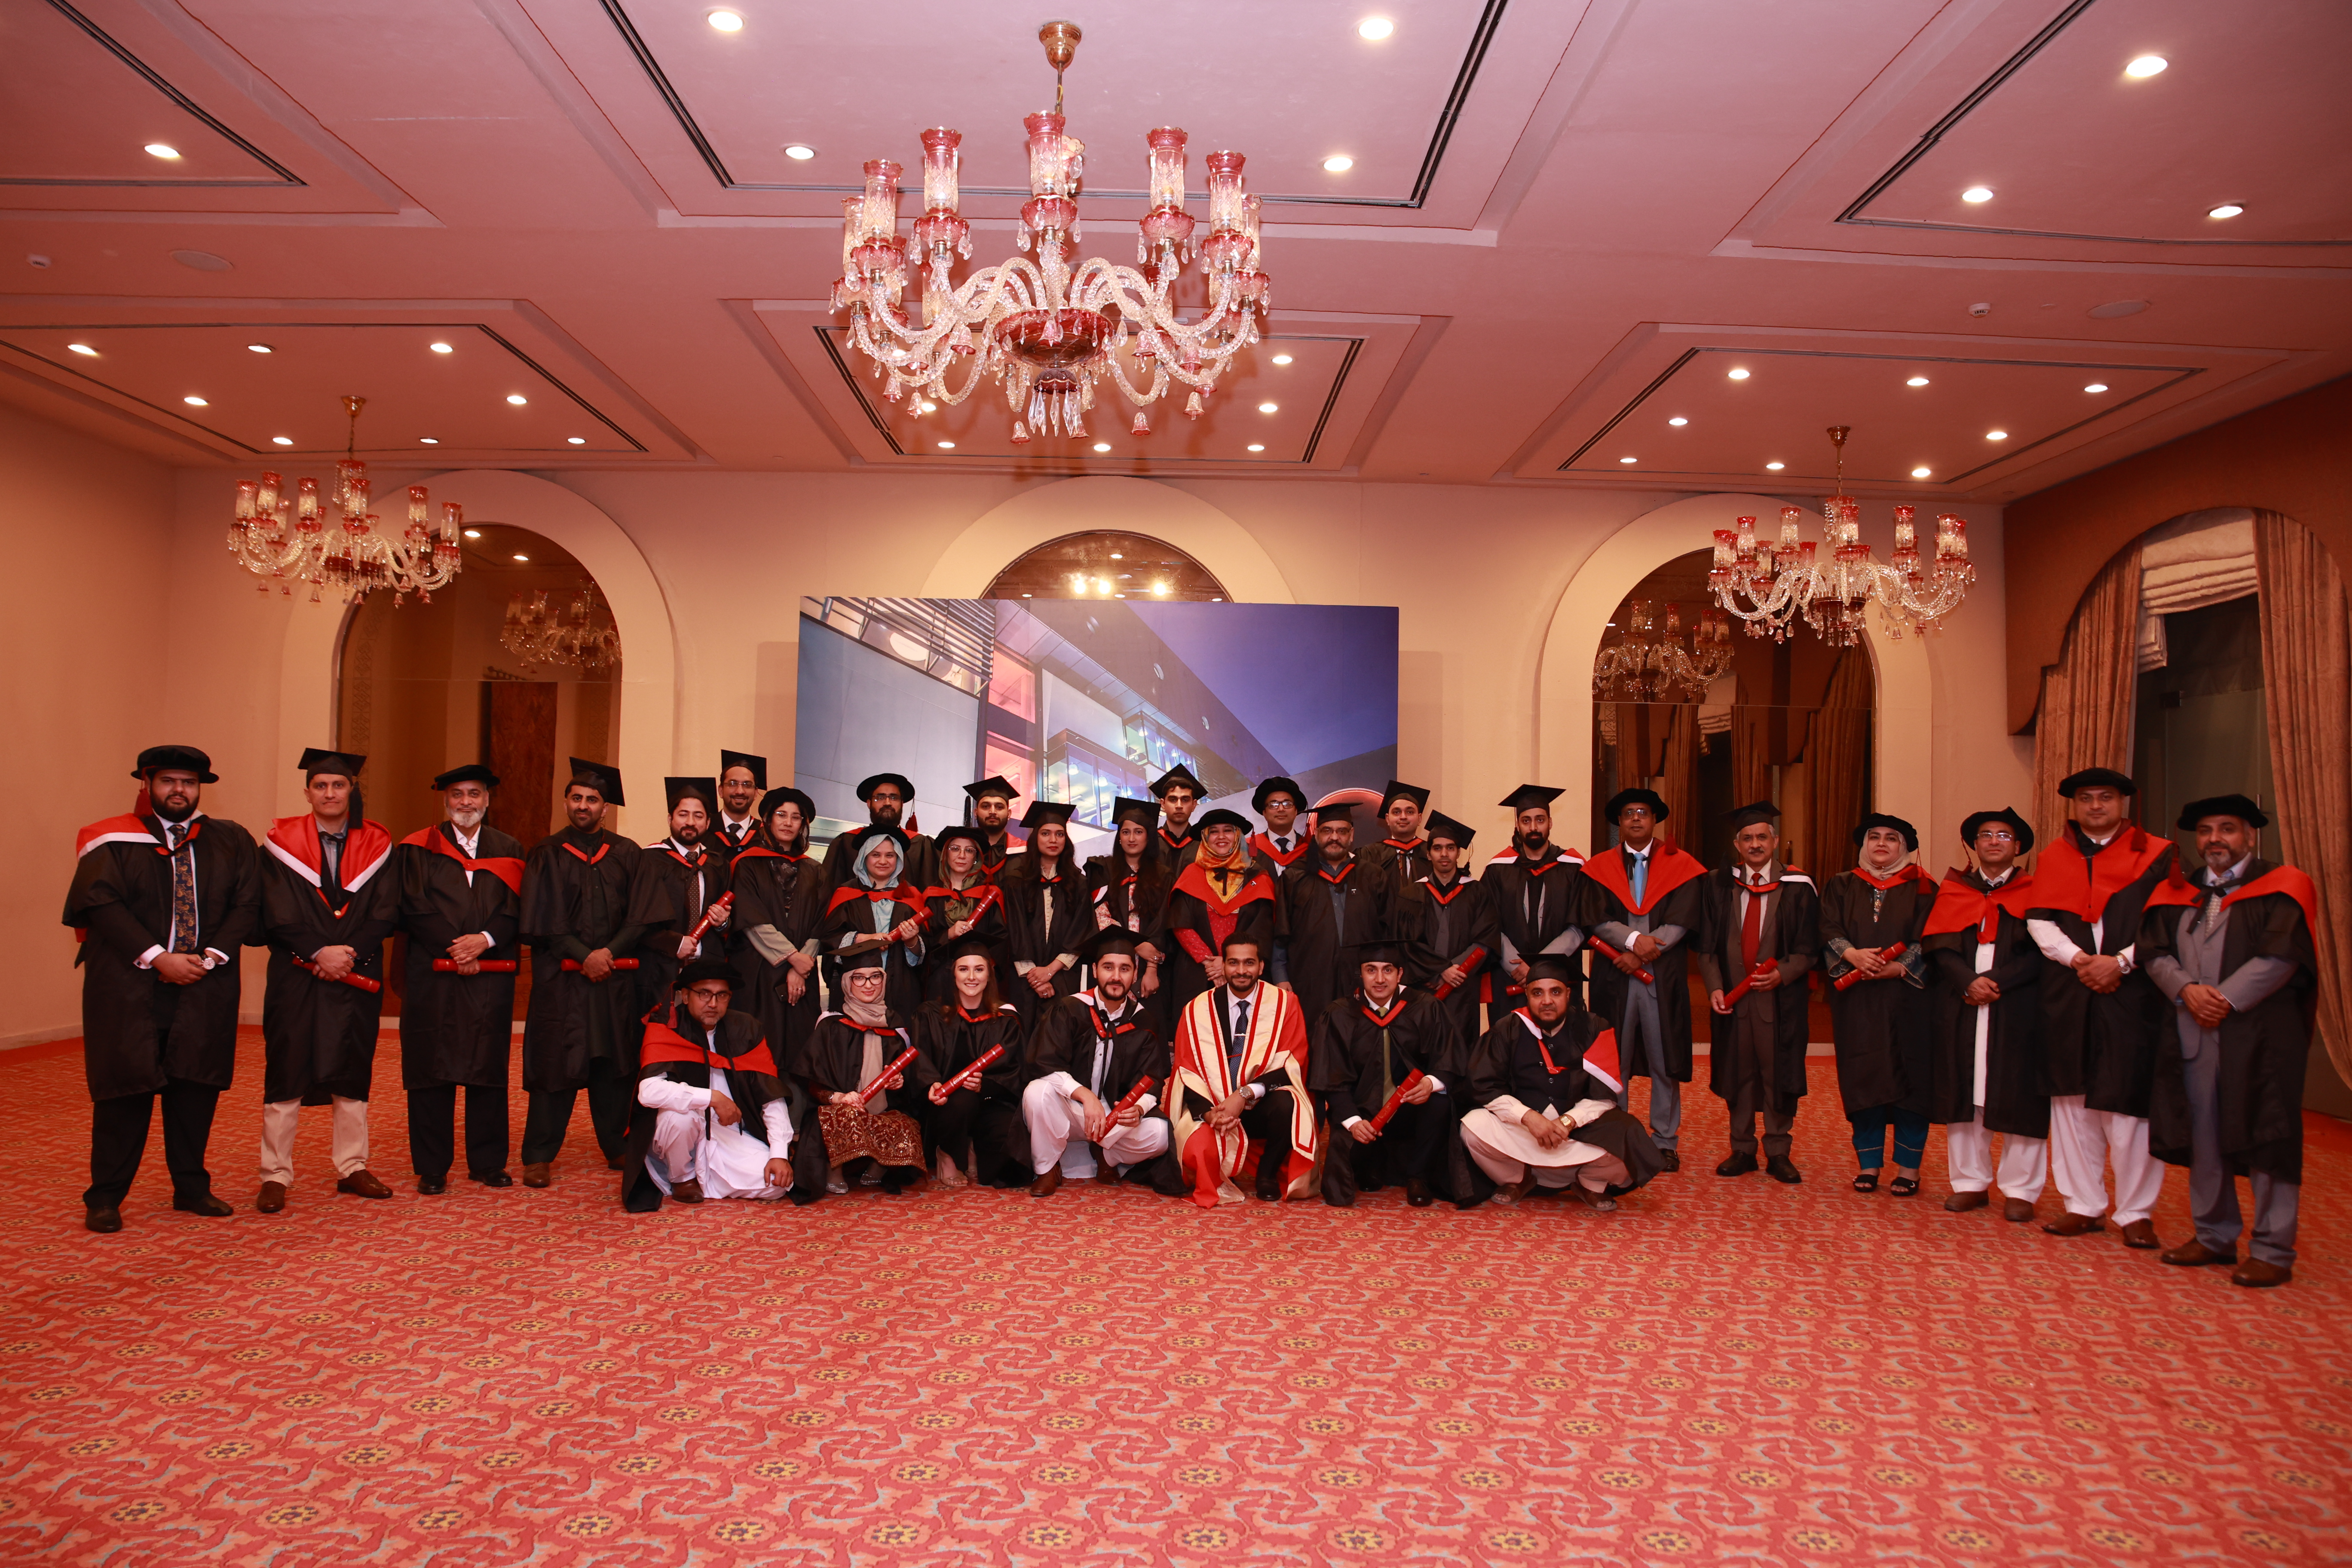 All the graduates celebrate together